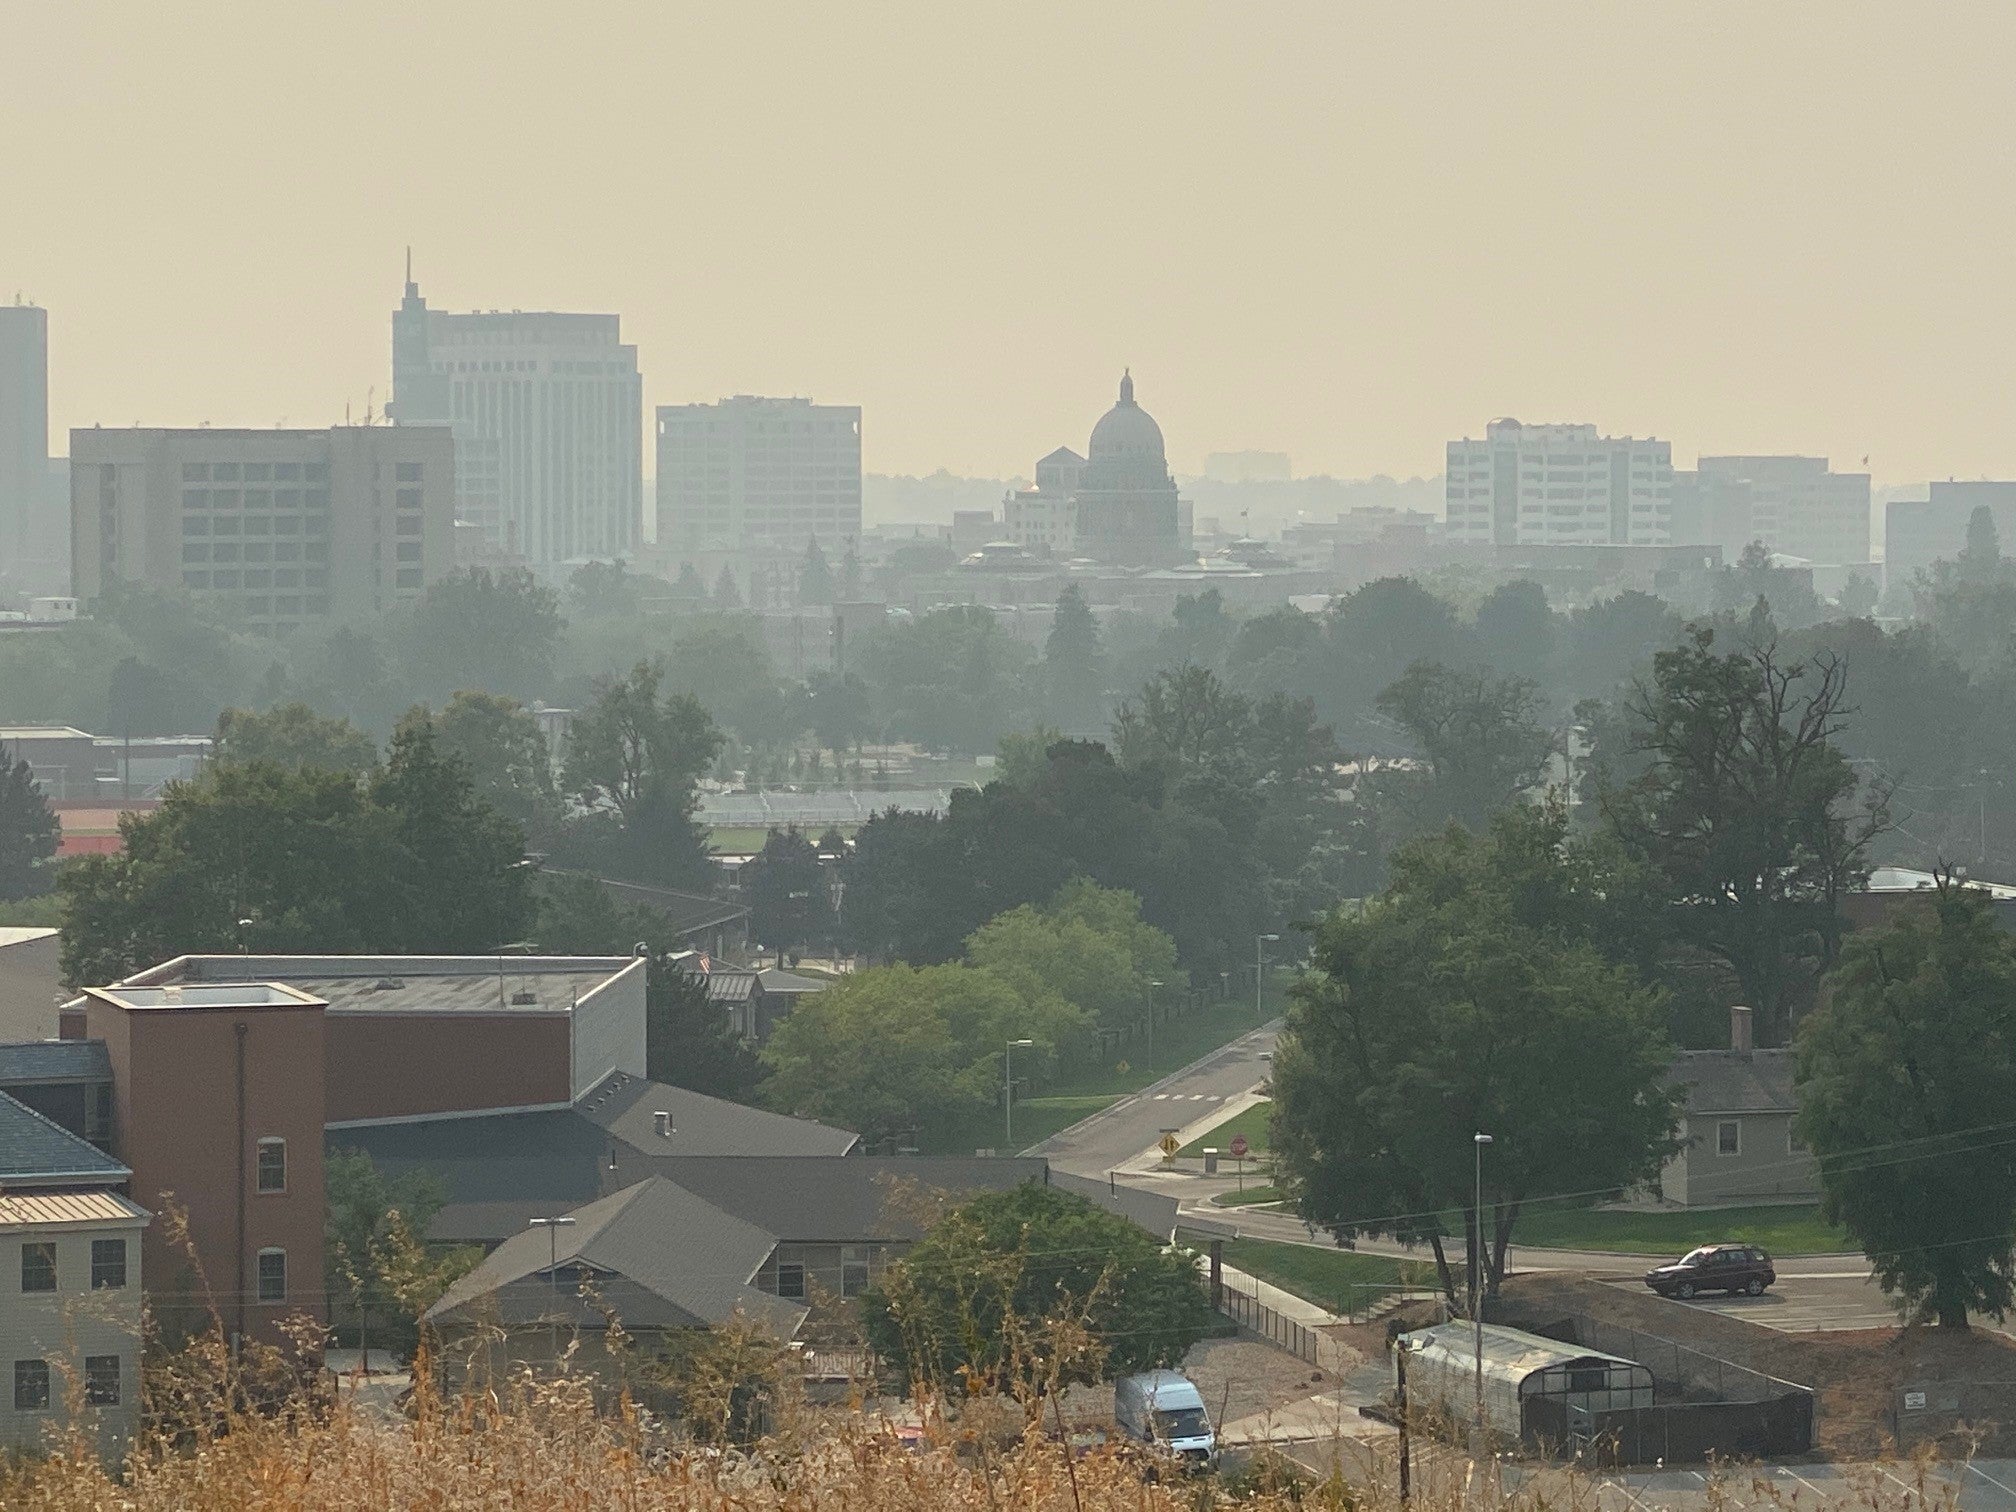 Photo of smoky skies above the Boise, Idaho city scape